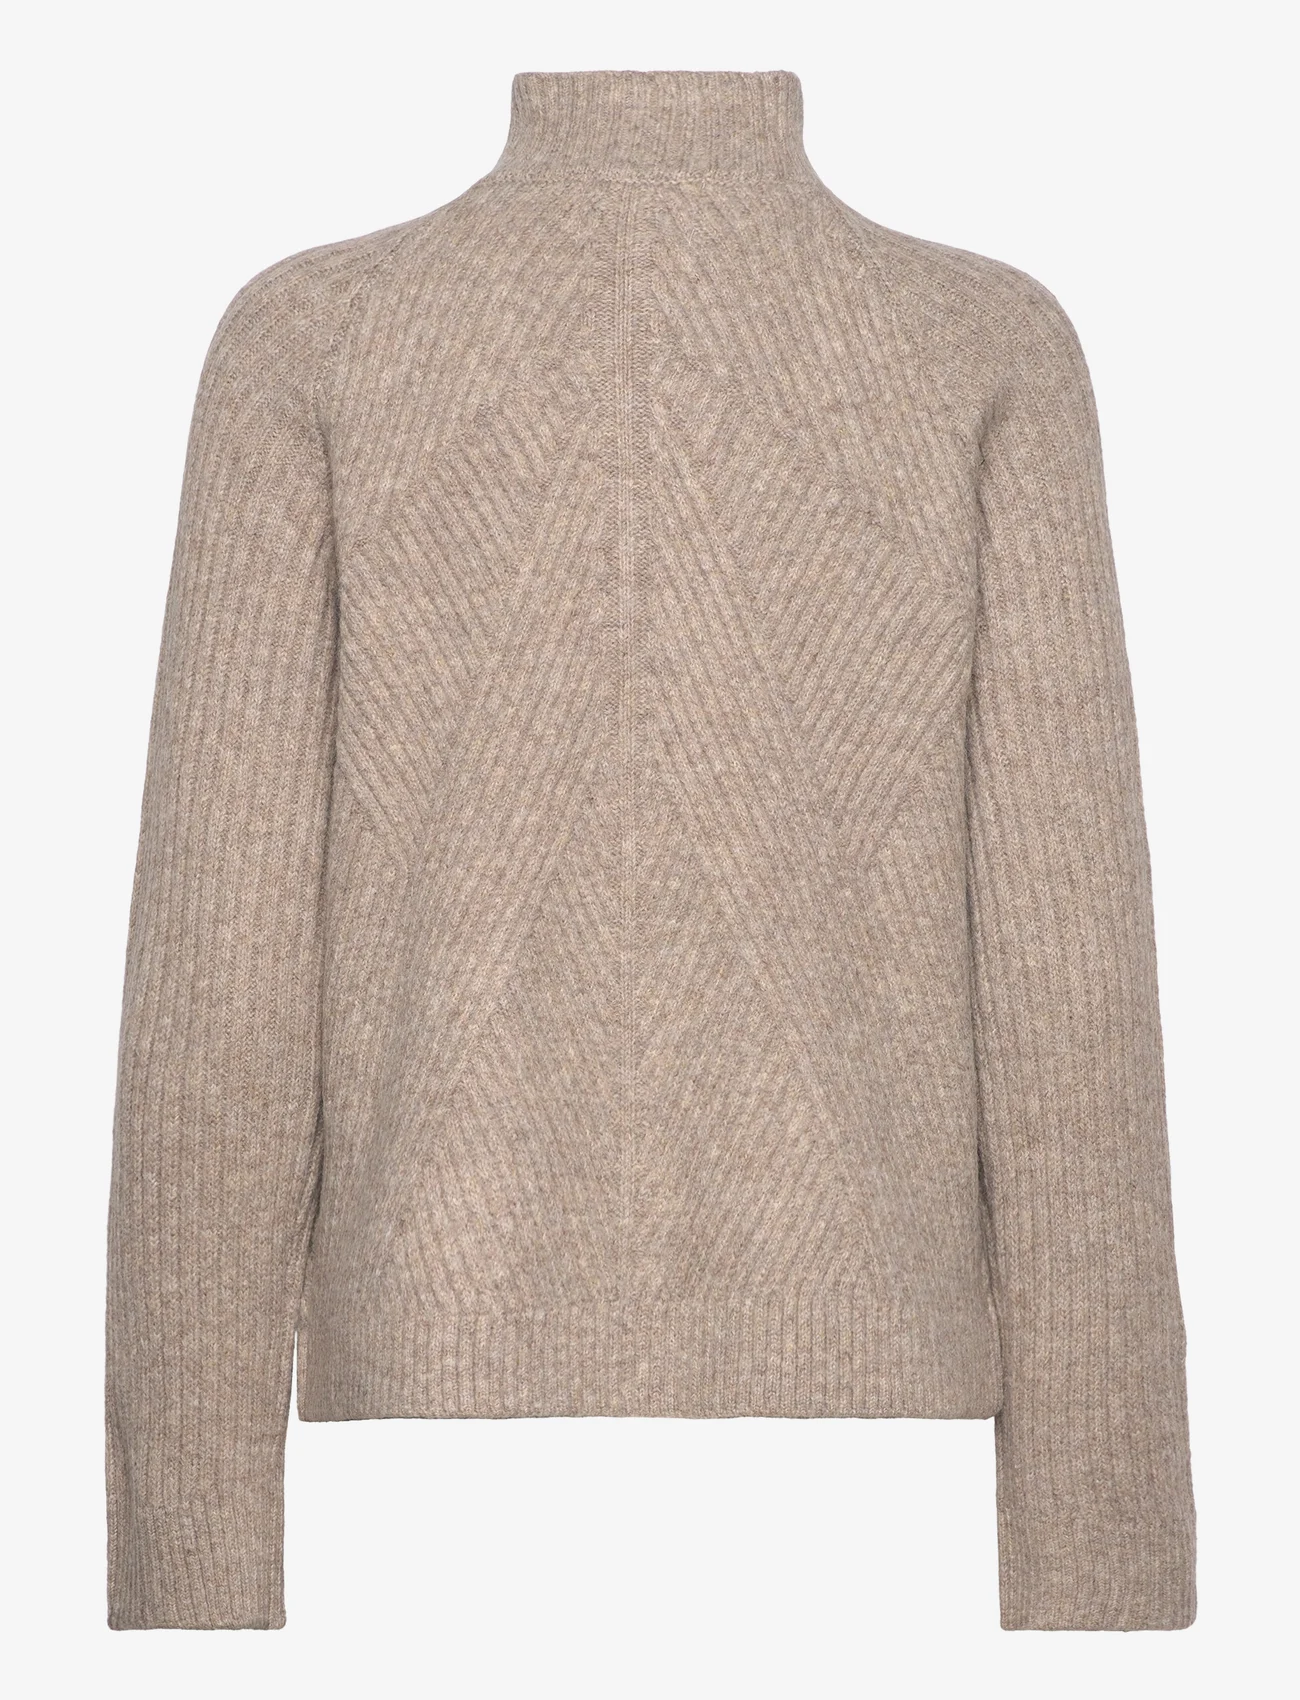 Sofie Schnoor - Sweater - pullover - warm grey - 1